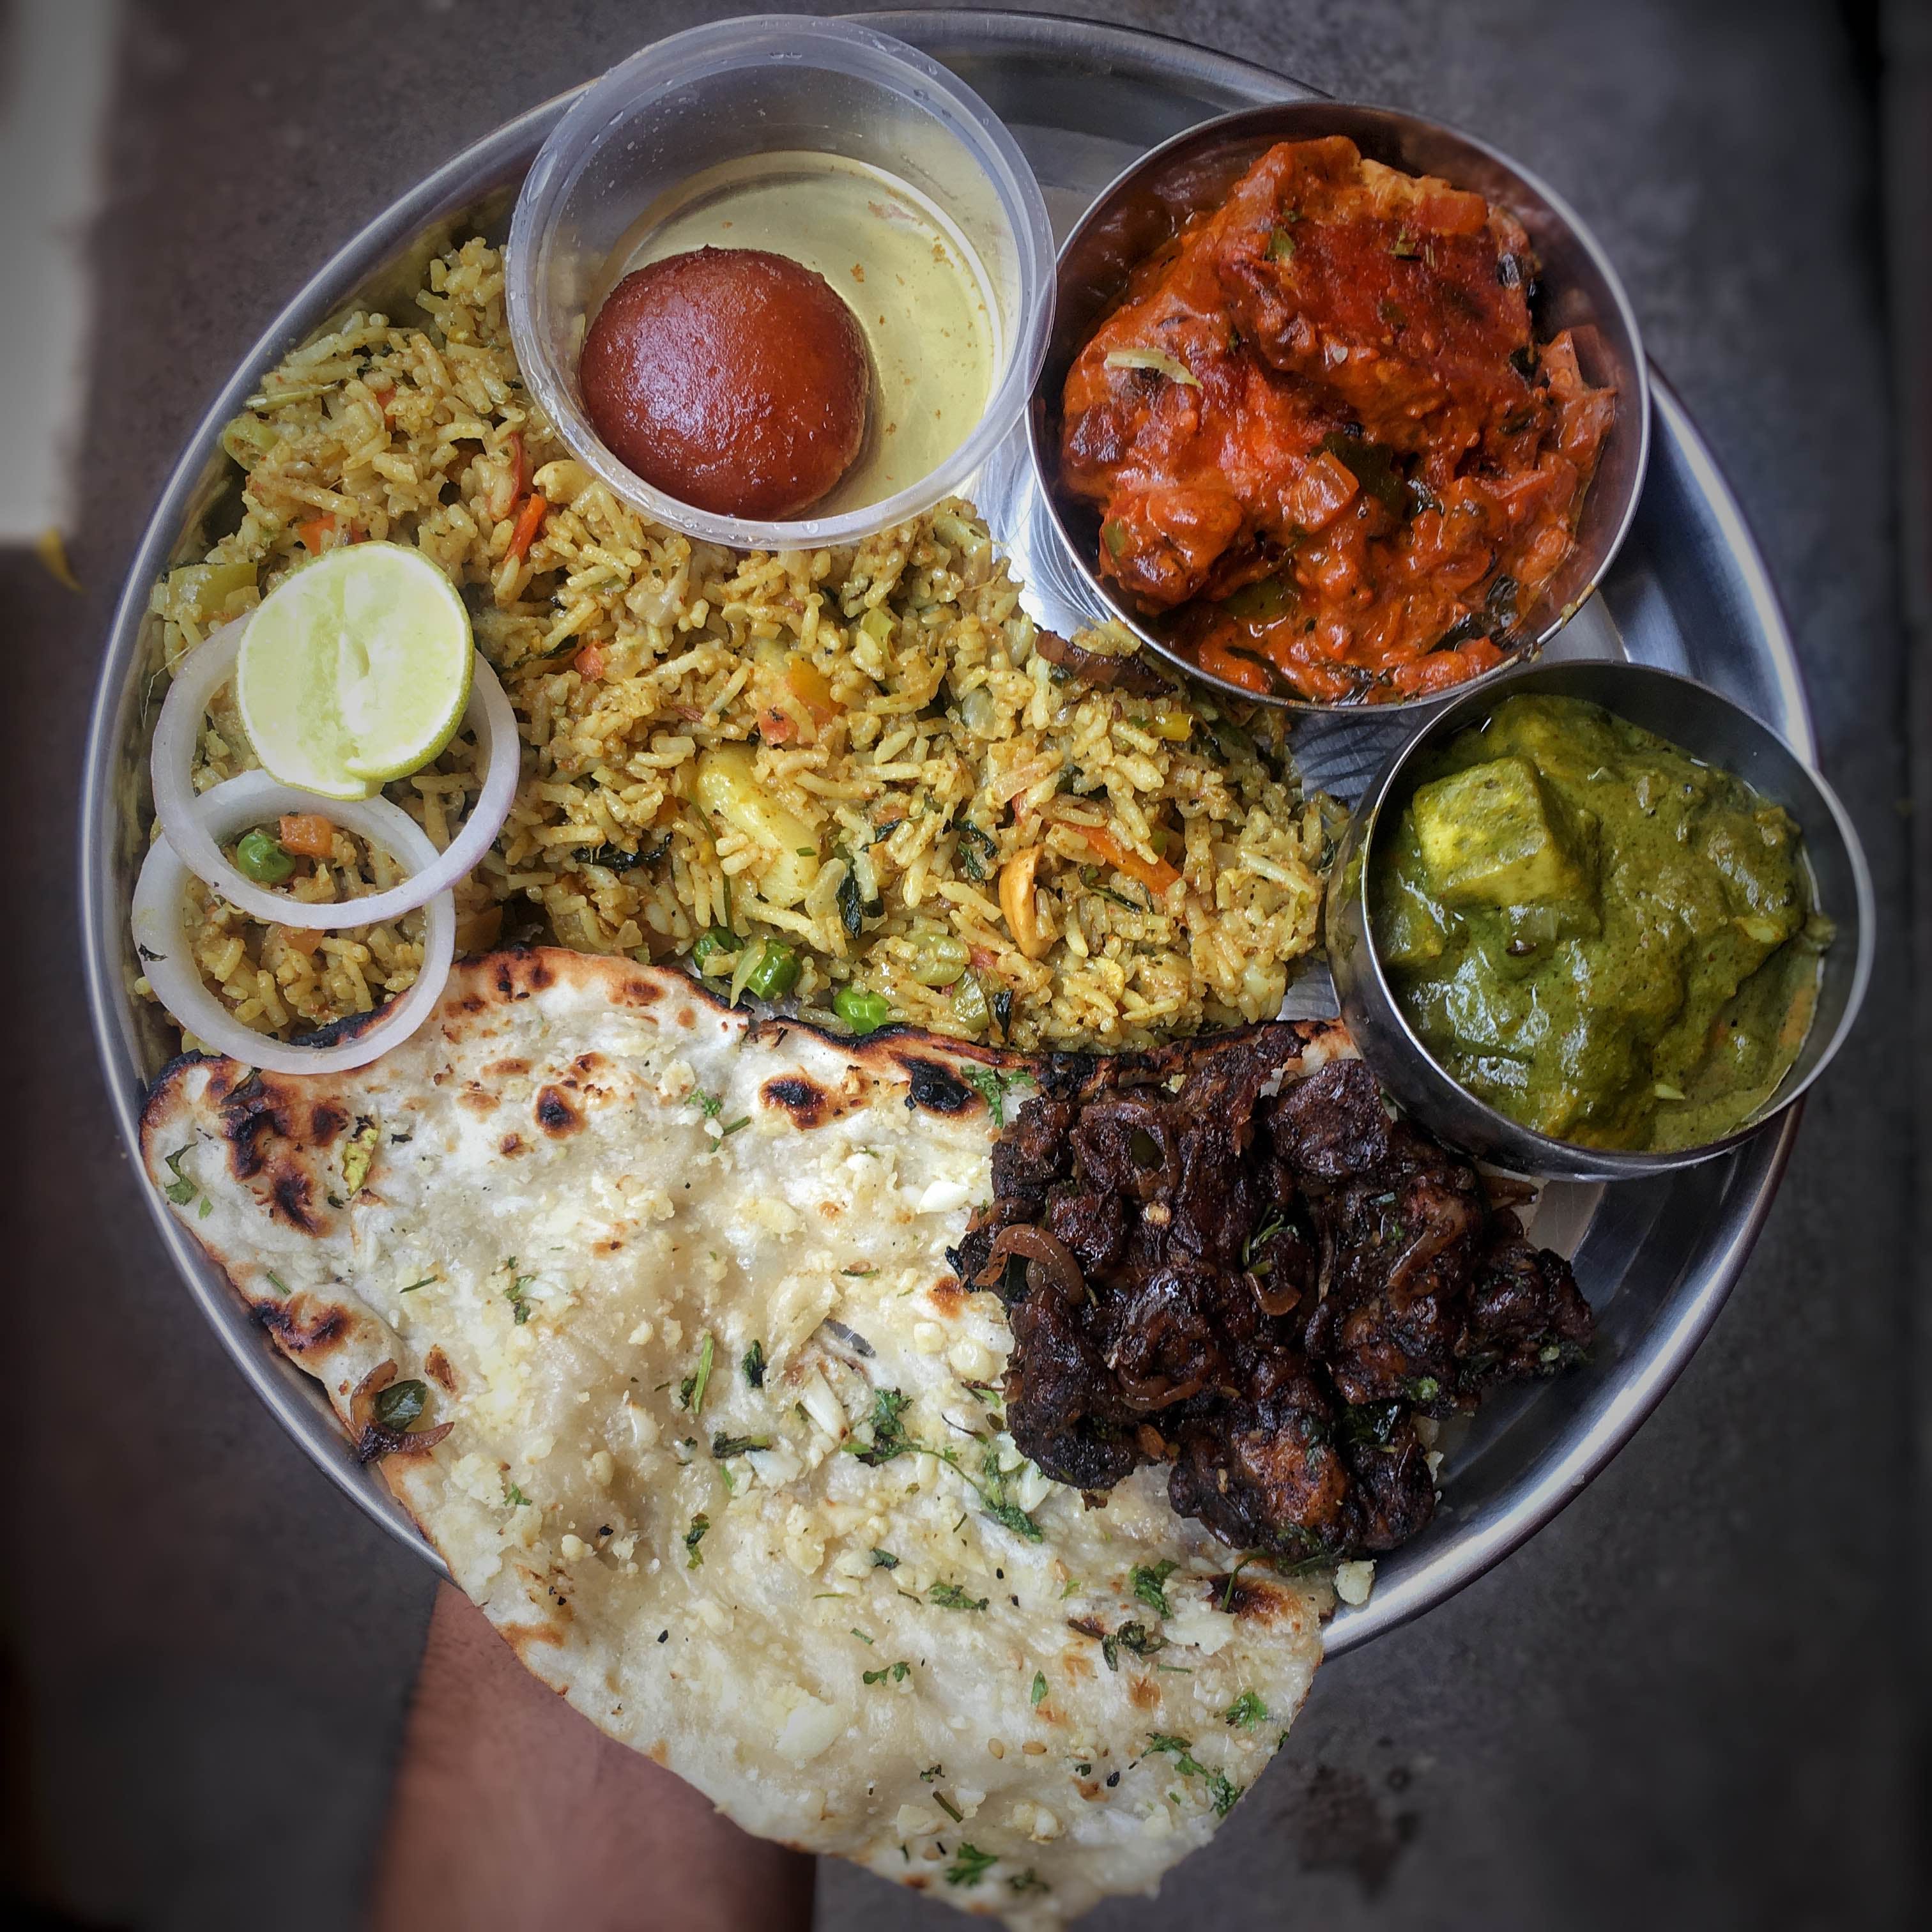 Dish,Food,Cuisine,Ingredient,Lunch,Meal,Staple food,Biryani,Sindhi cuisine,Produce